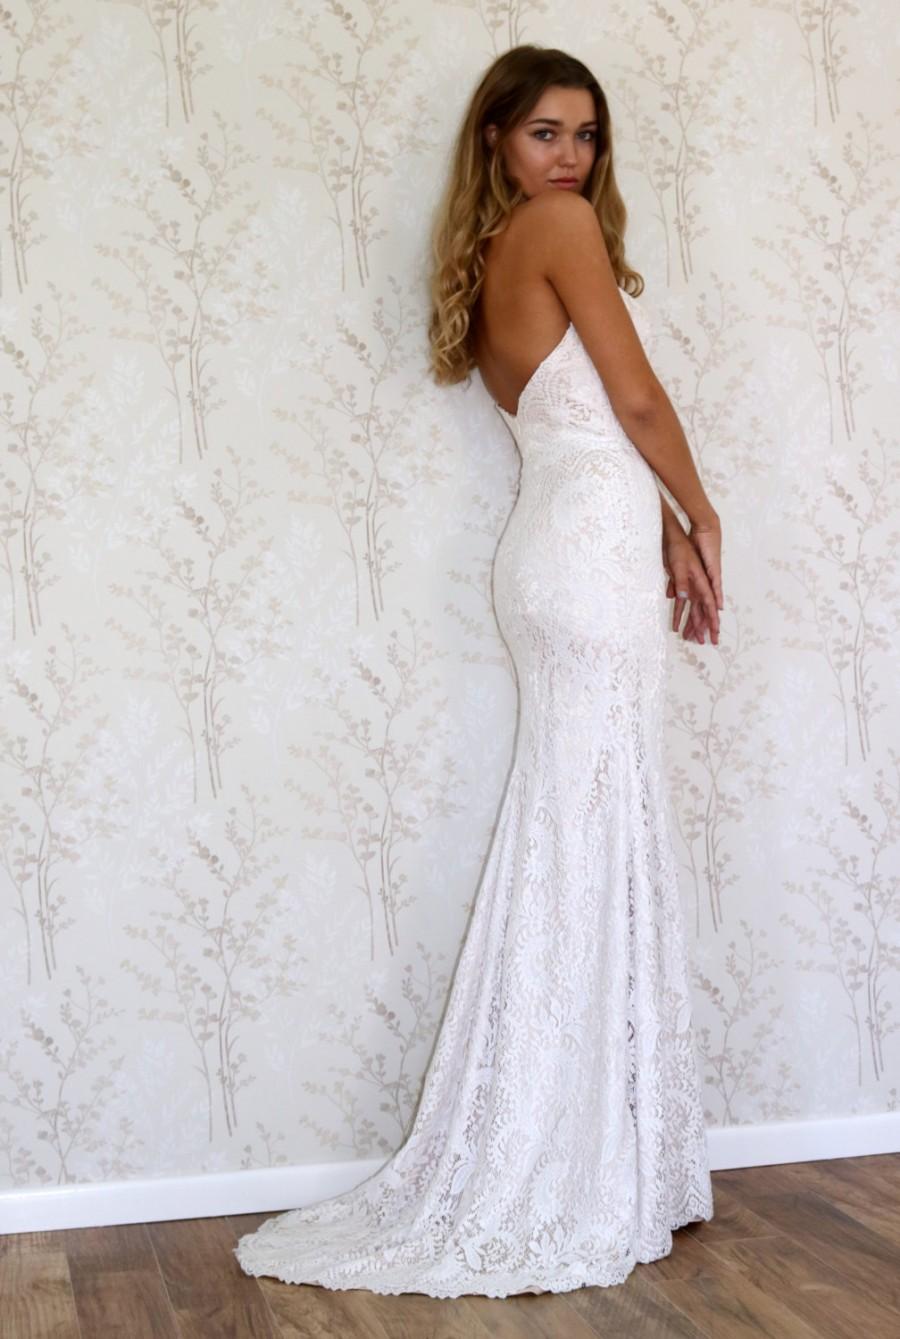 Mariage - Lace Wedding dress/Simple bohemian style wedding gown/Strapless sweetheart neckline wedding dress.